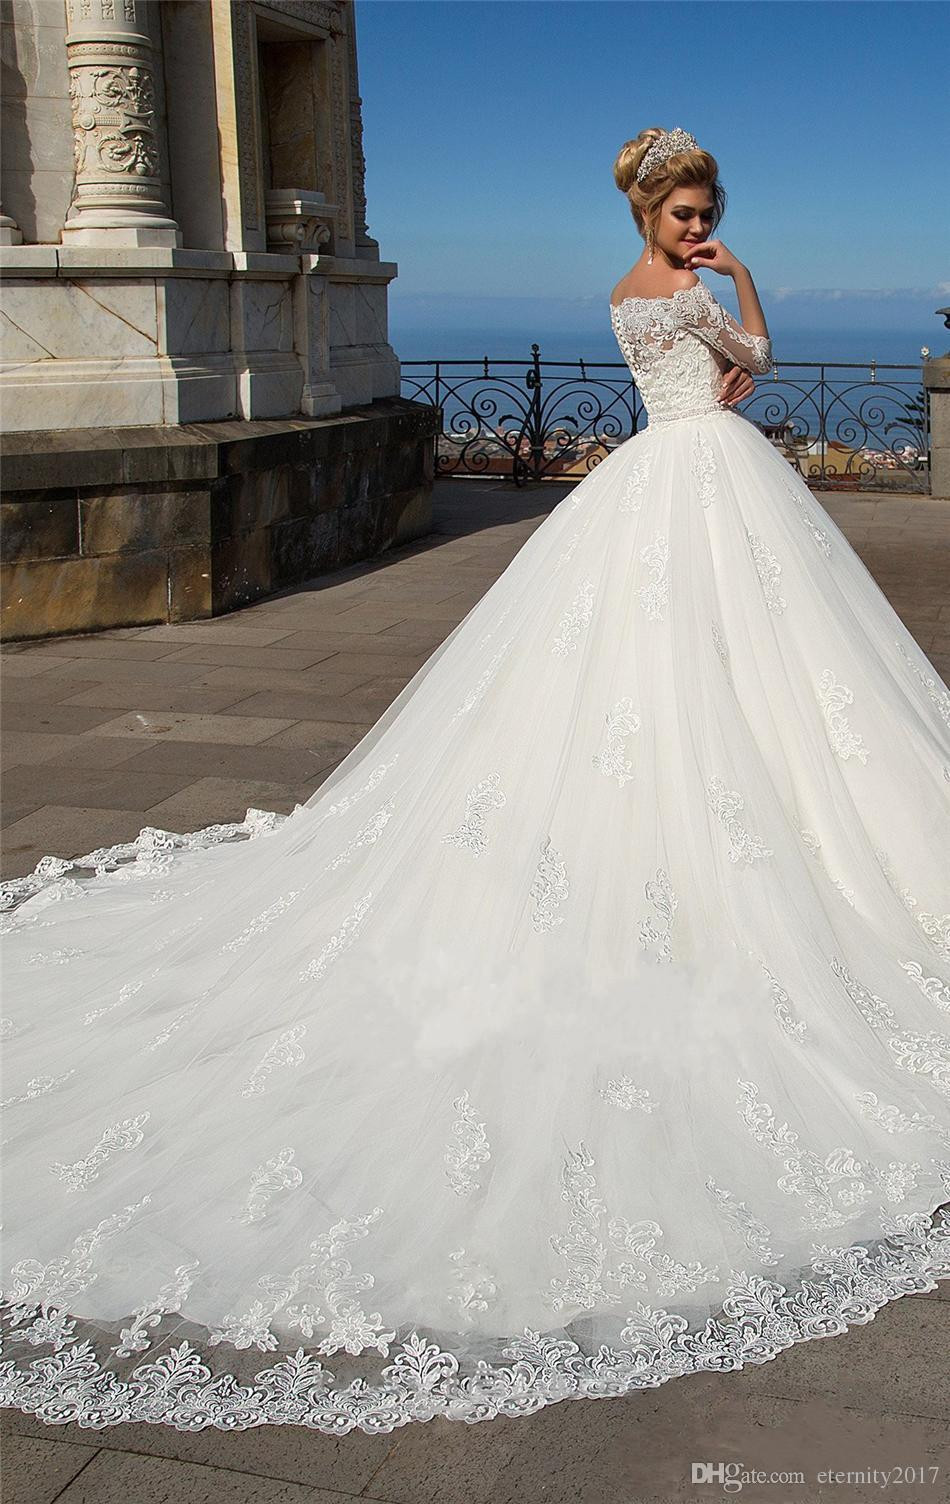 Lace Ball Gown Wedding Dresses
 Elegant White Lace Ball Gown Wedding Dresses With Sleeves